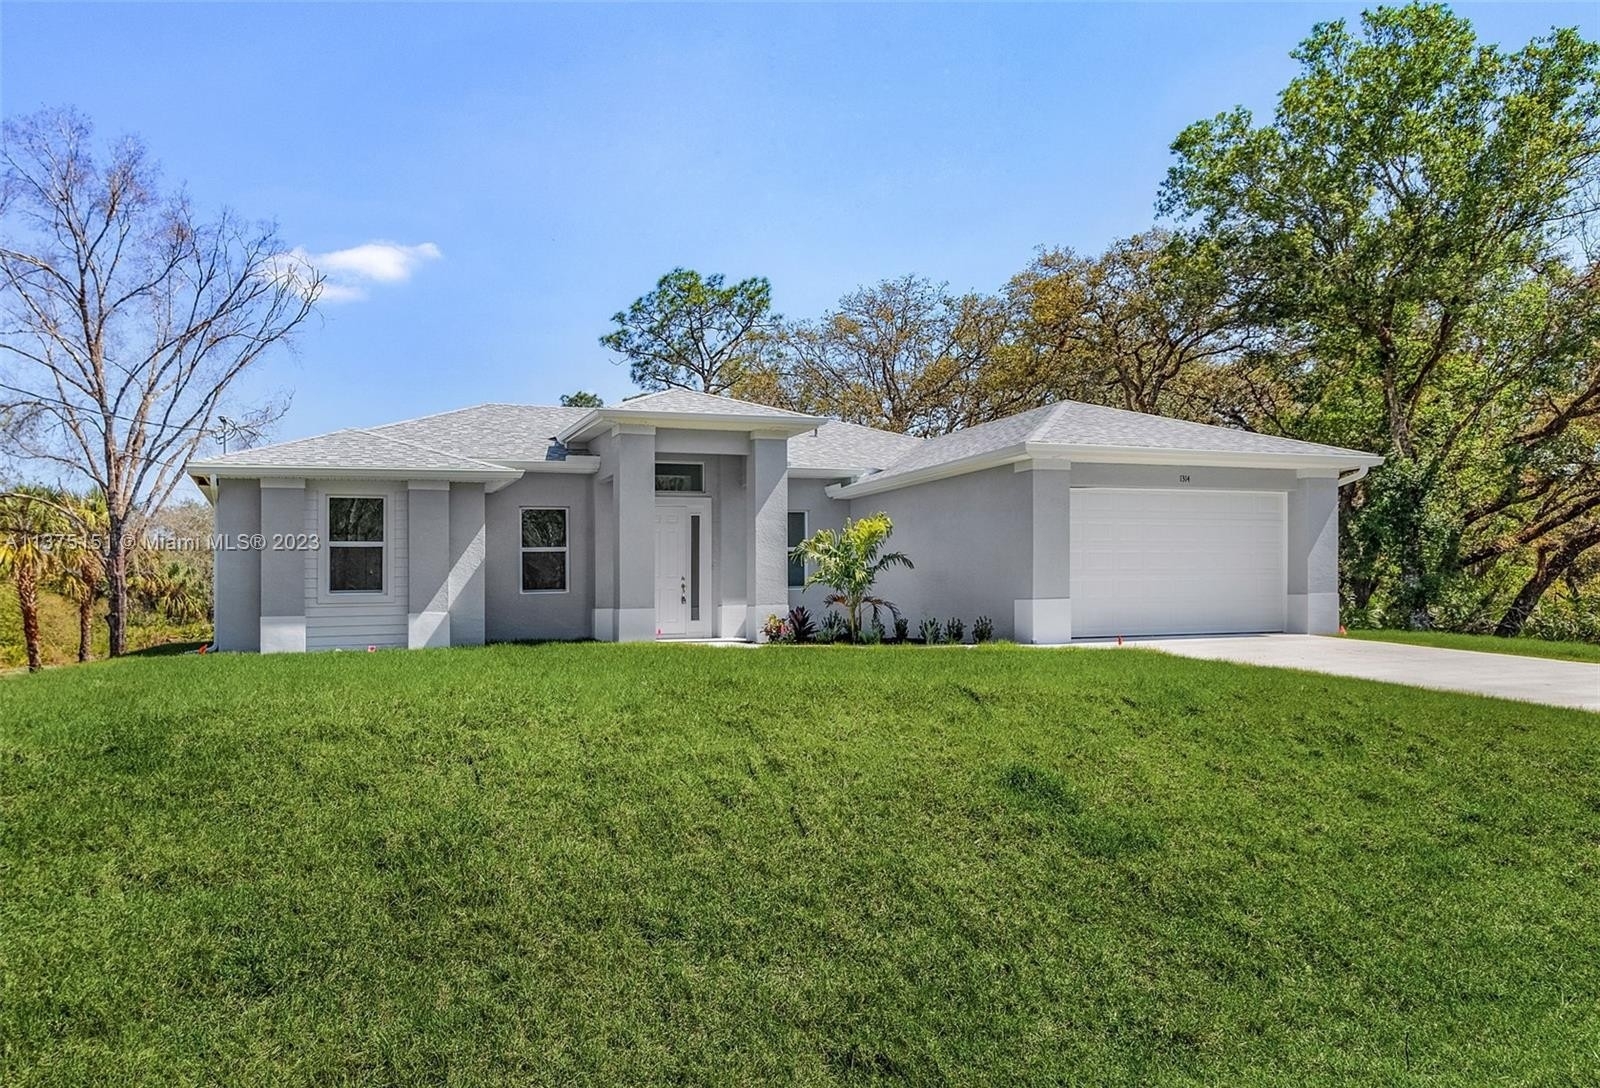 Property at Richmond, Lehigh Acres, FL 33972